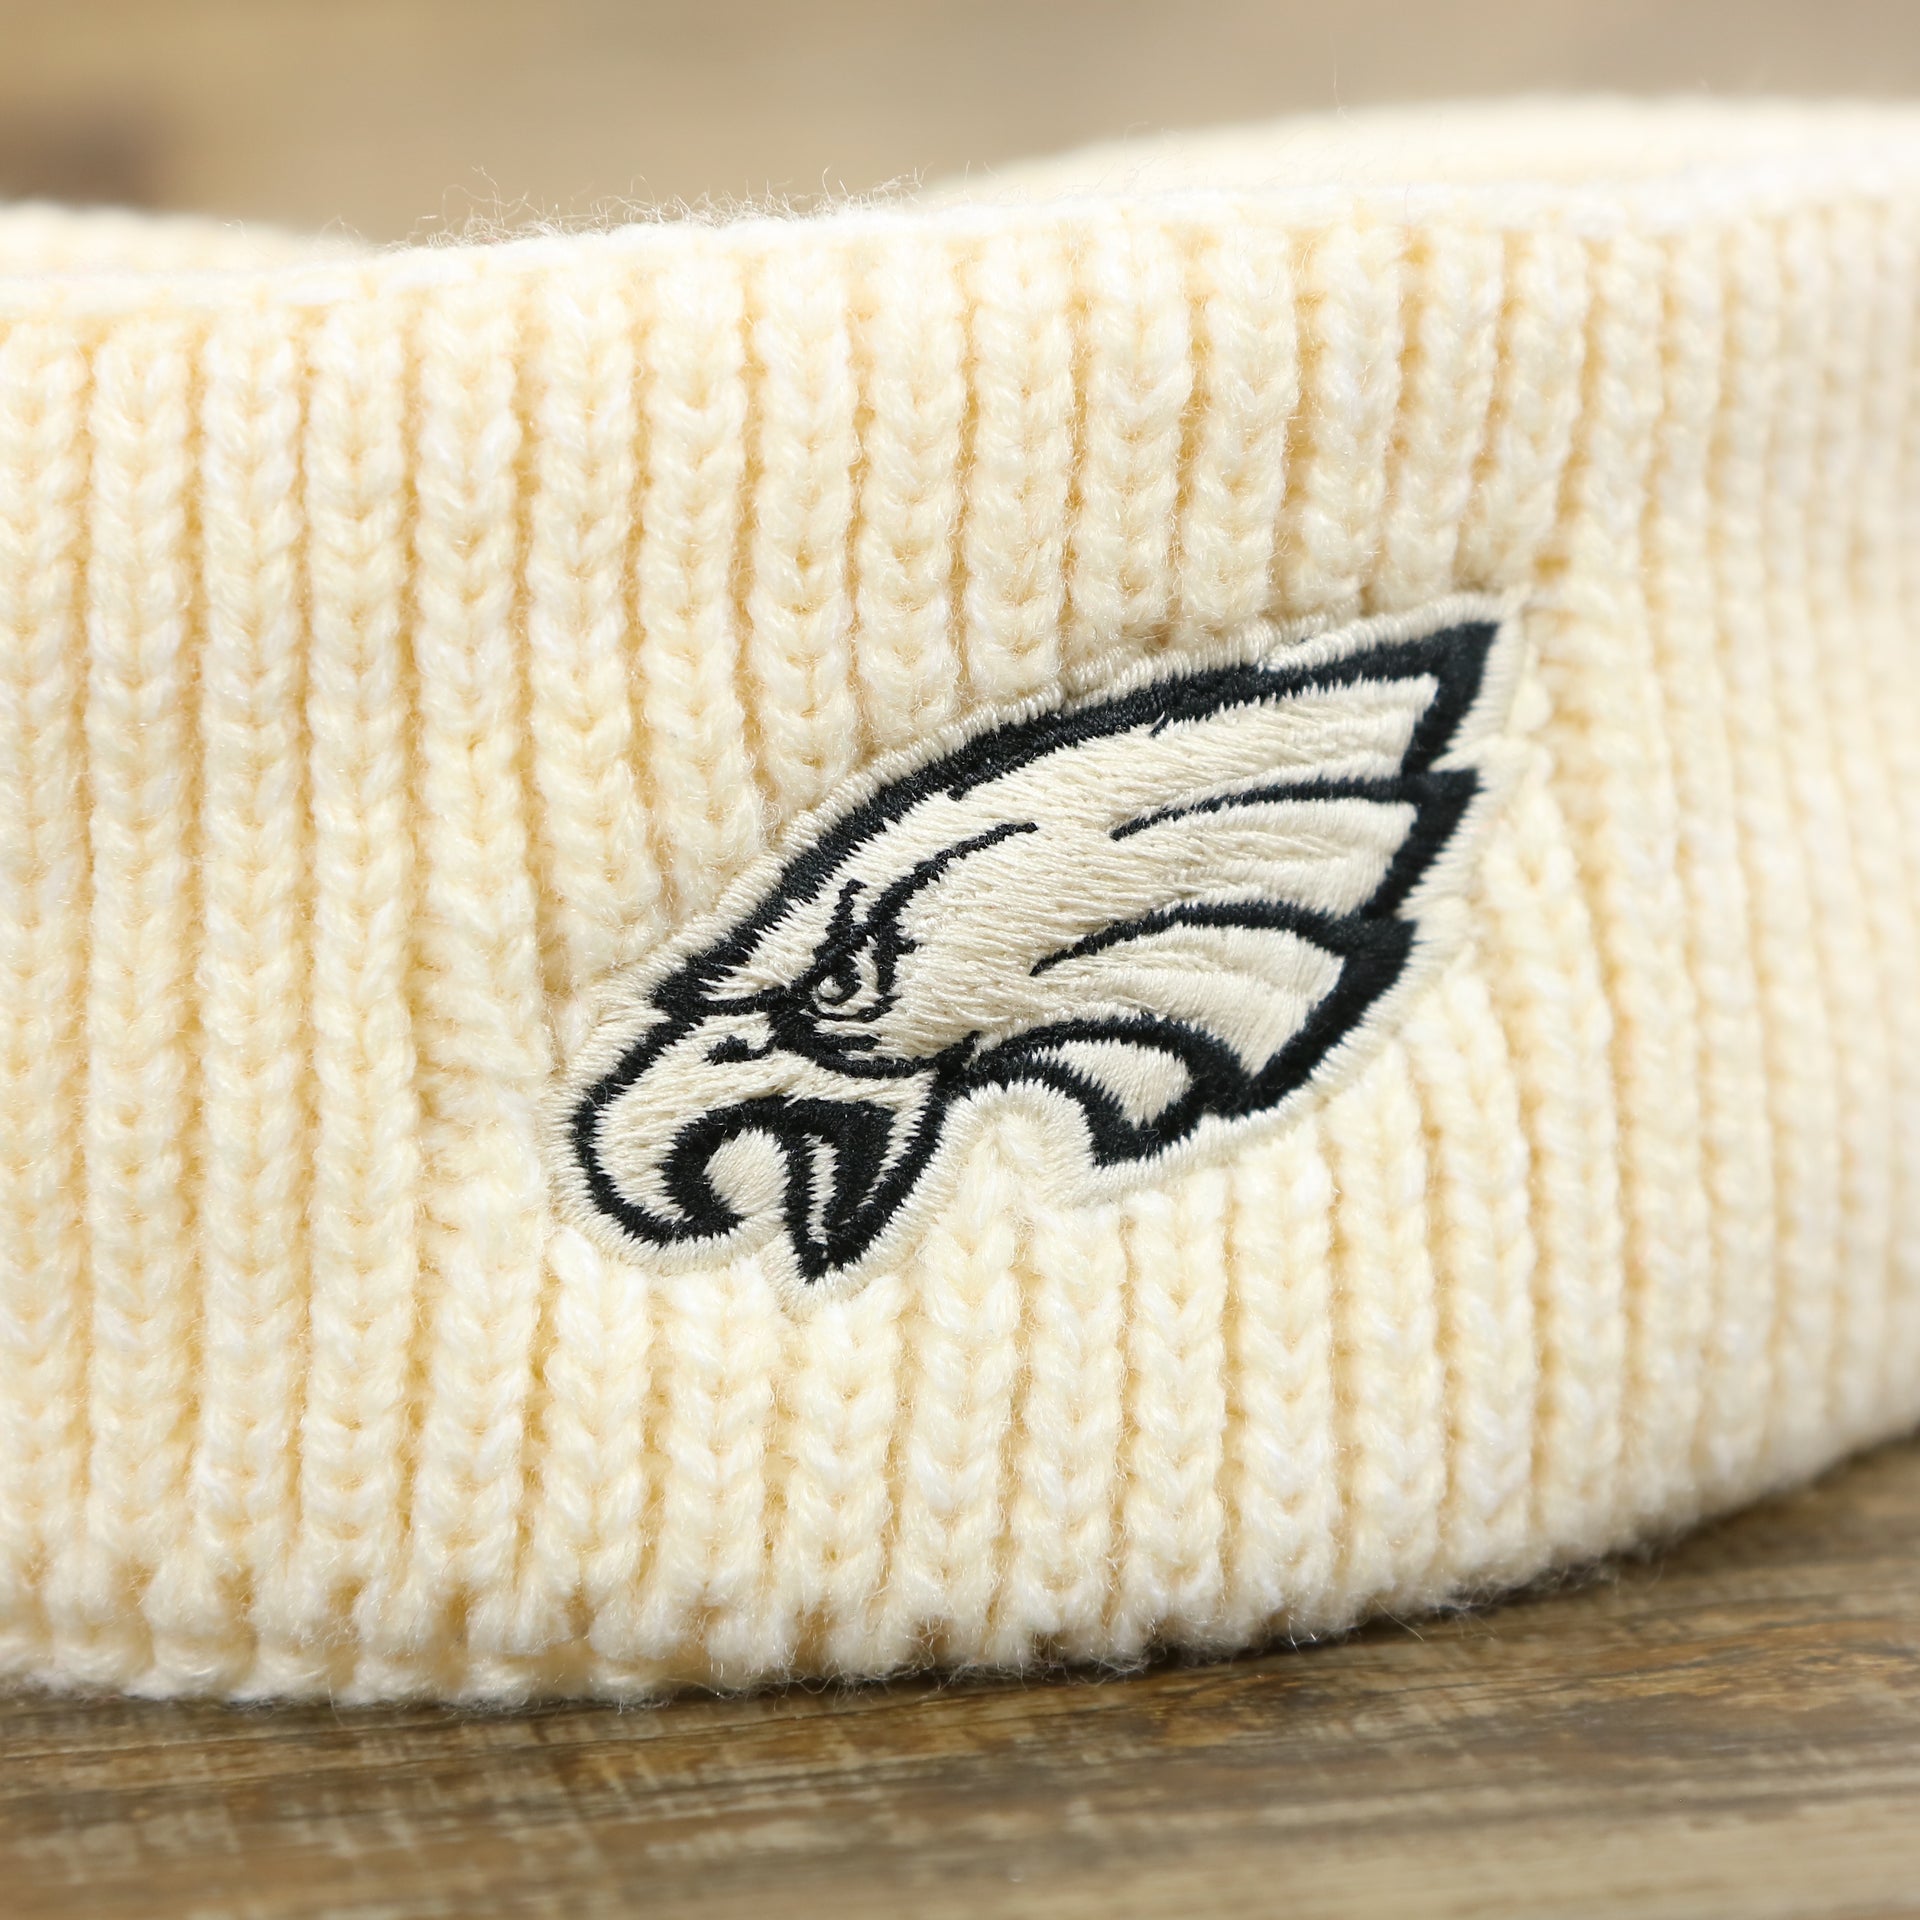 The Eagles Logo on the Women’s Philadelphia Eagles Winter Knit Cream Twisted Headband | White Twisted Headband